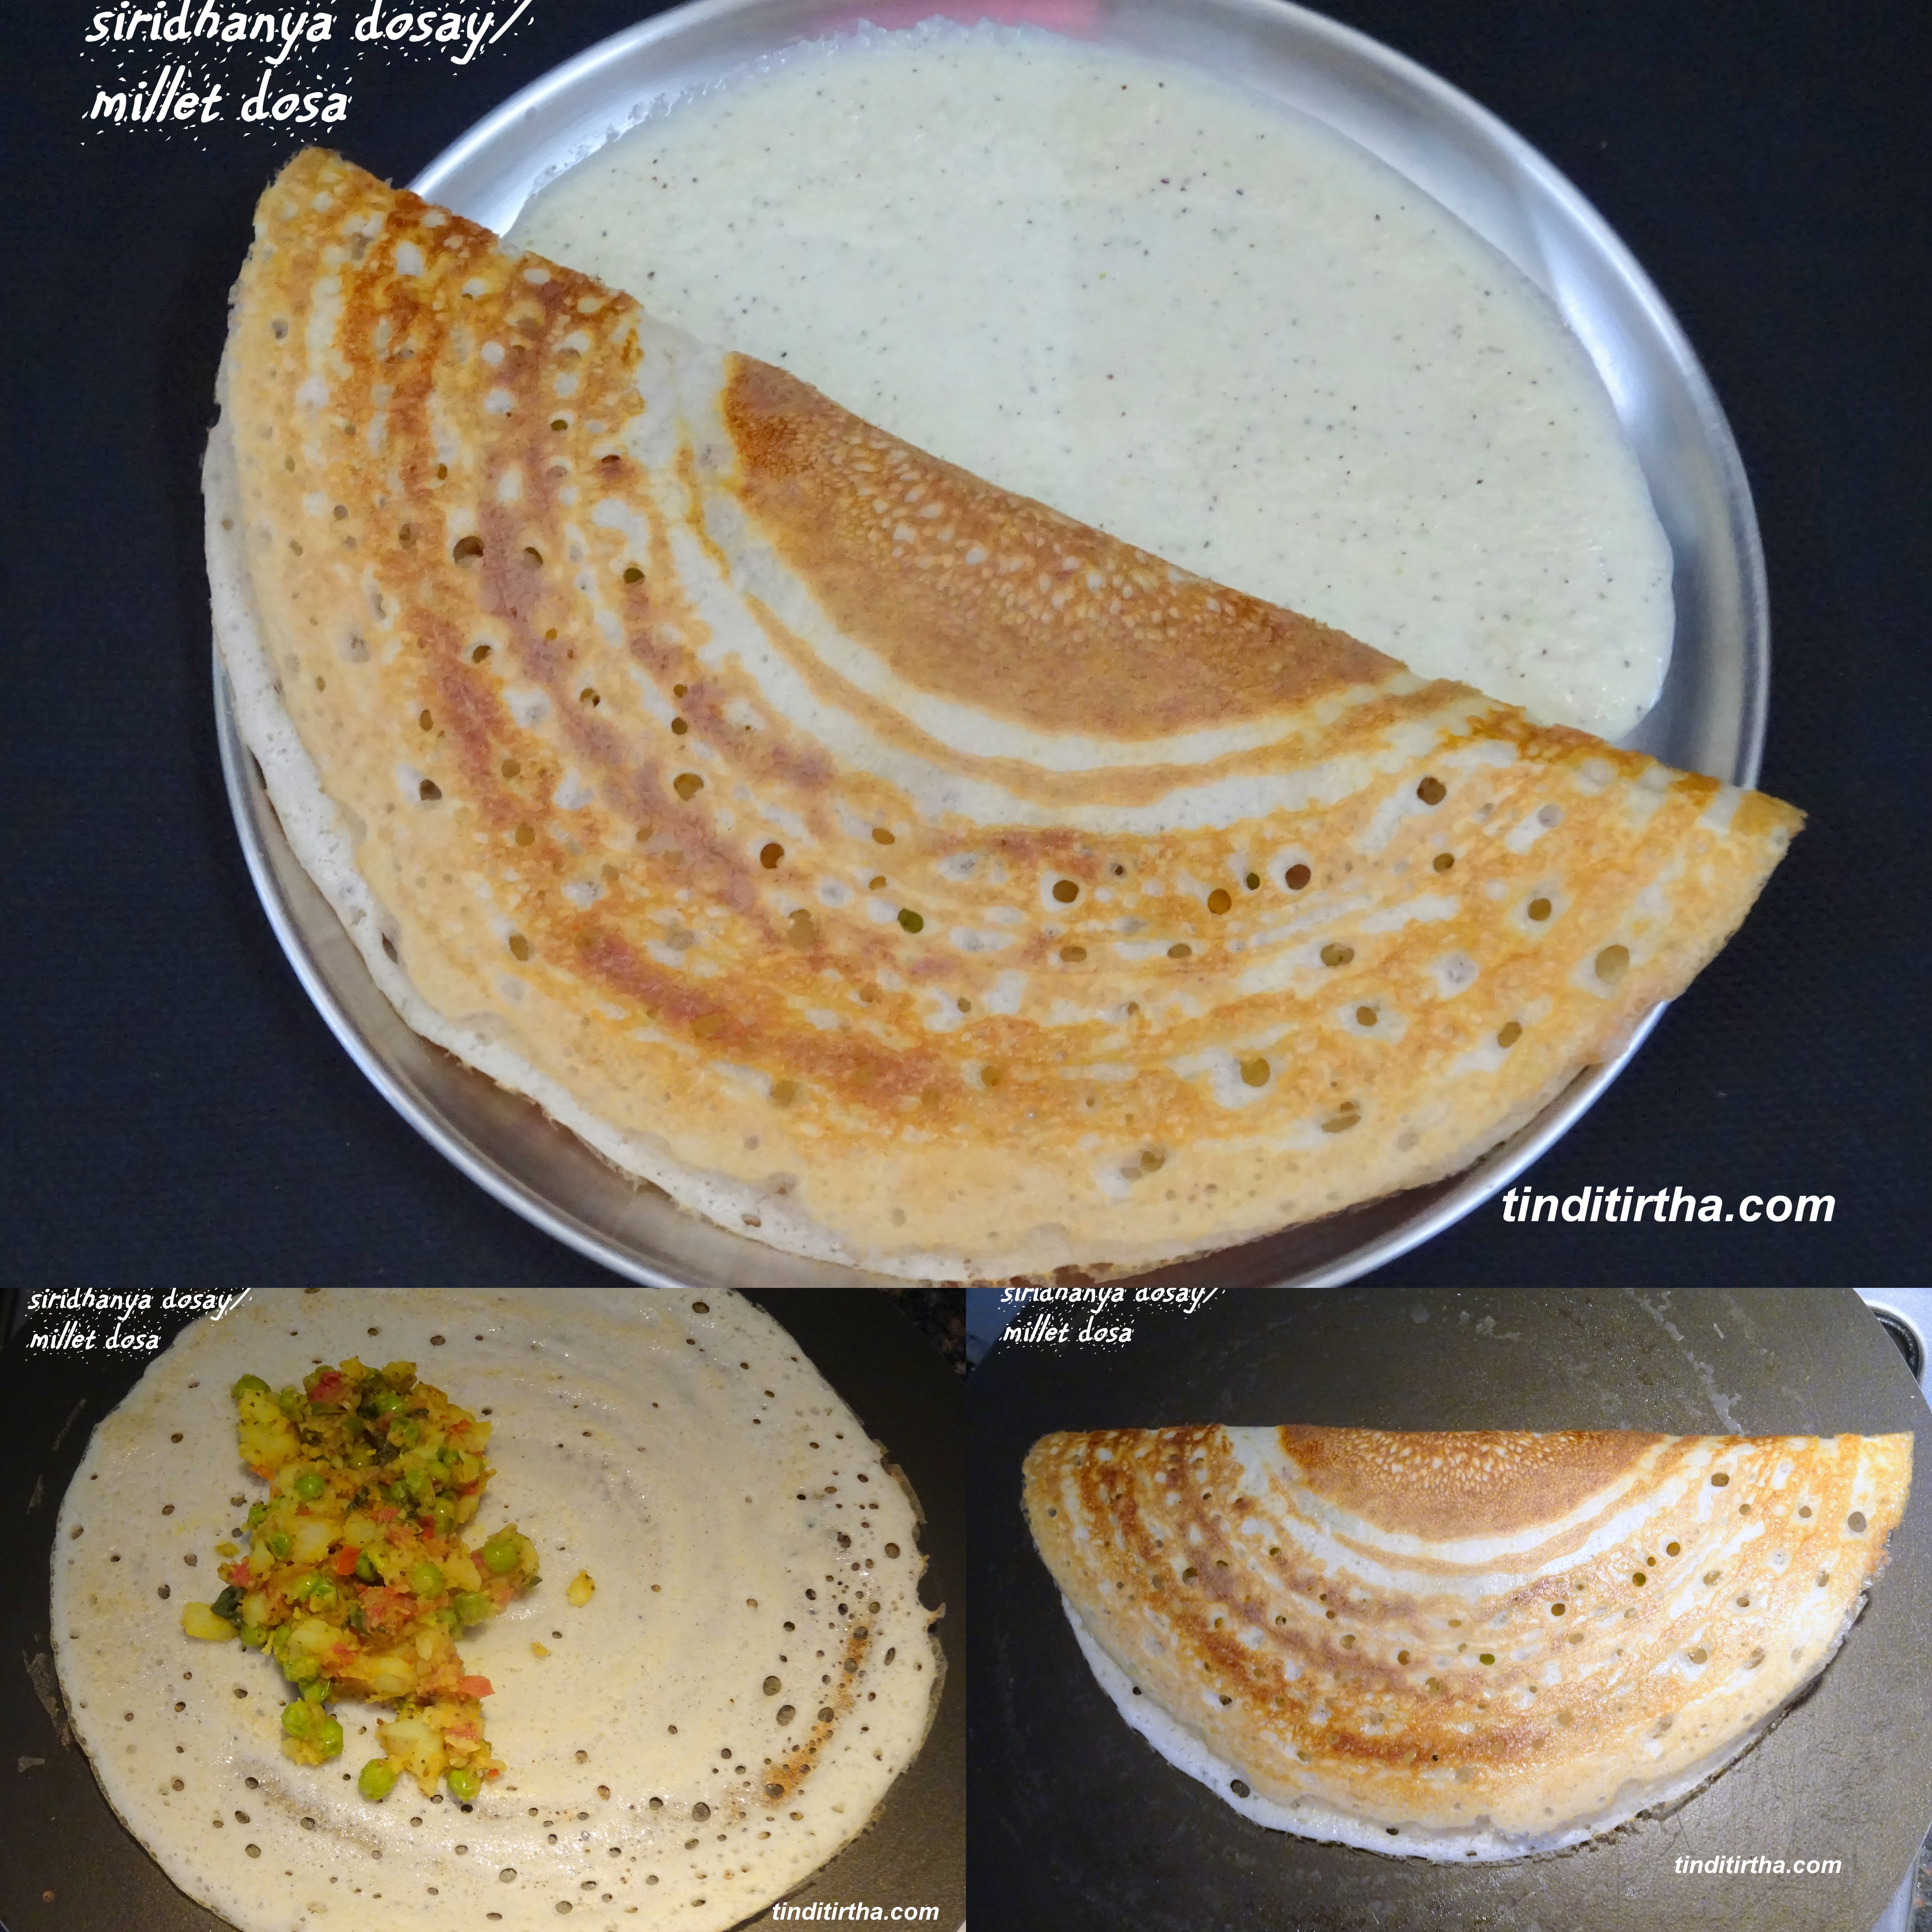 SIRIDHANYA MASALE DOSAY/MILLETS MASALA DOSA…… using both little millet & foxtail millet